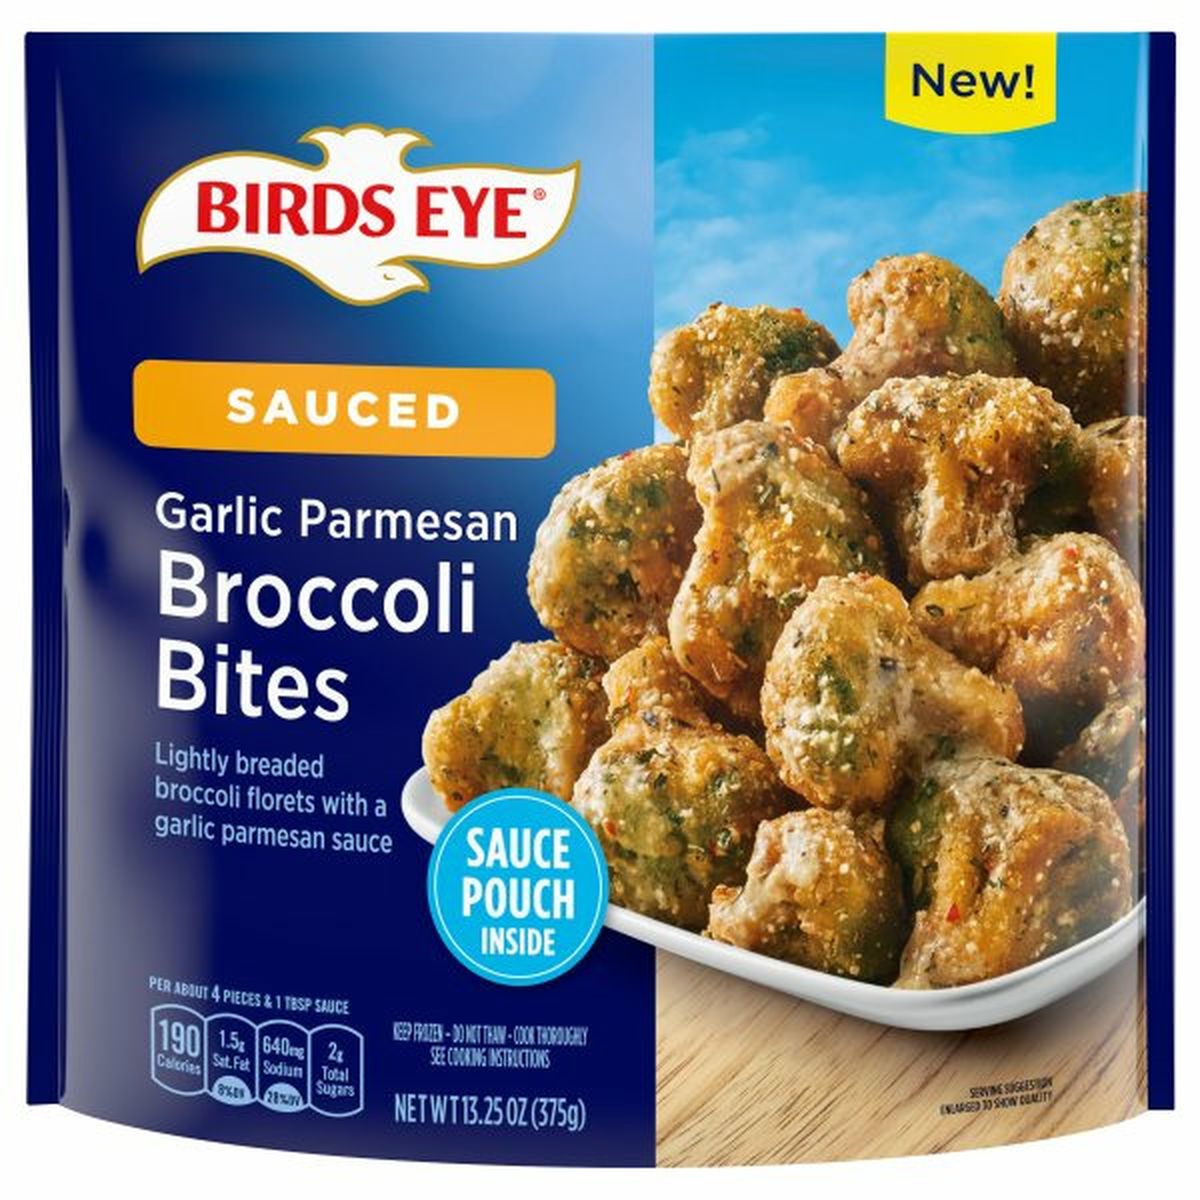 Calories in Birds Eye Broccoli Bites, Garlic Parmesan, Sauced